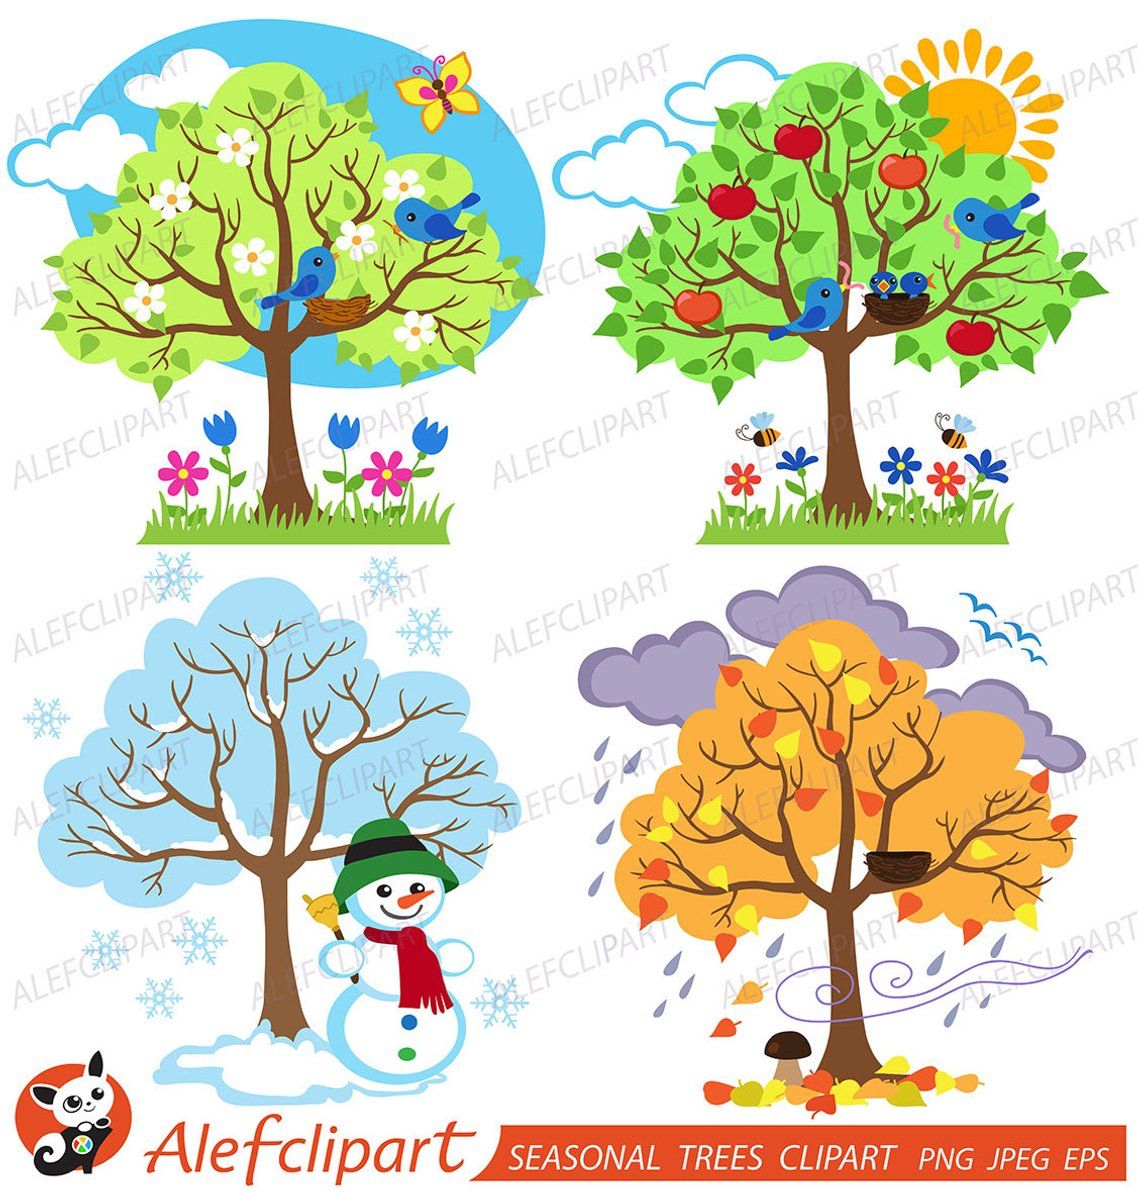 Four Seasons Trees Clipart Seasonal Trees and Birds Clipart